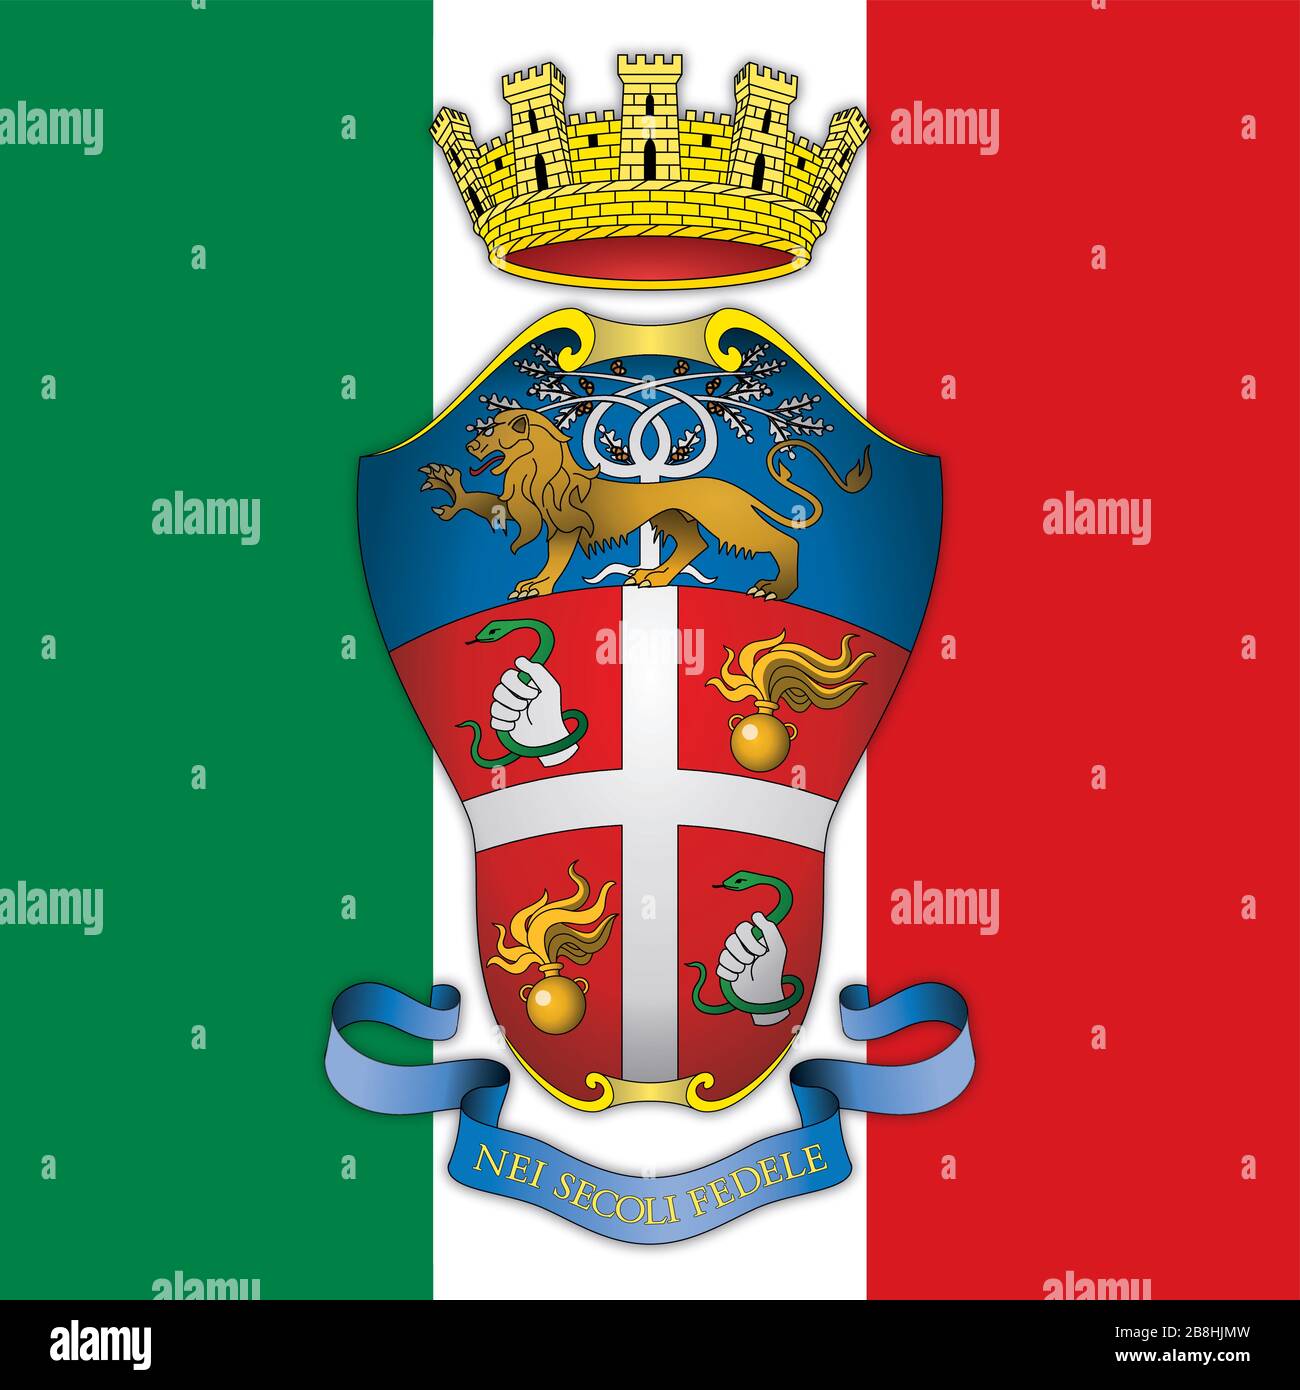 Corpo dei Carabinieri coat of arms on the Italian flag, Italy, vector illustration Stock Vector